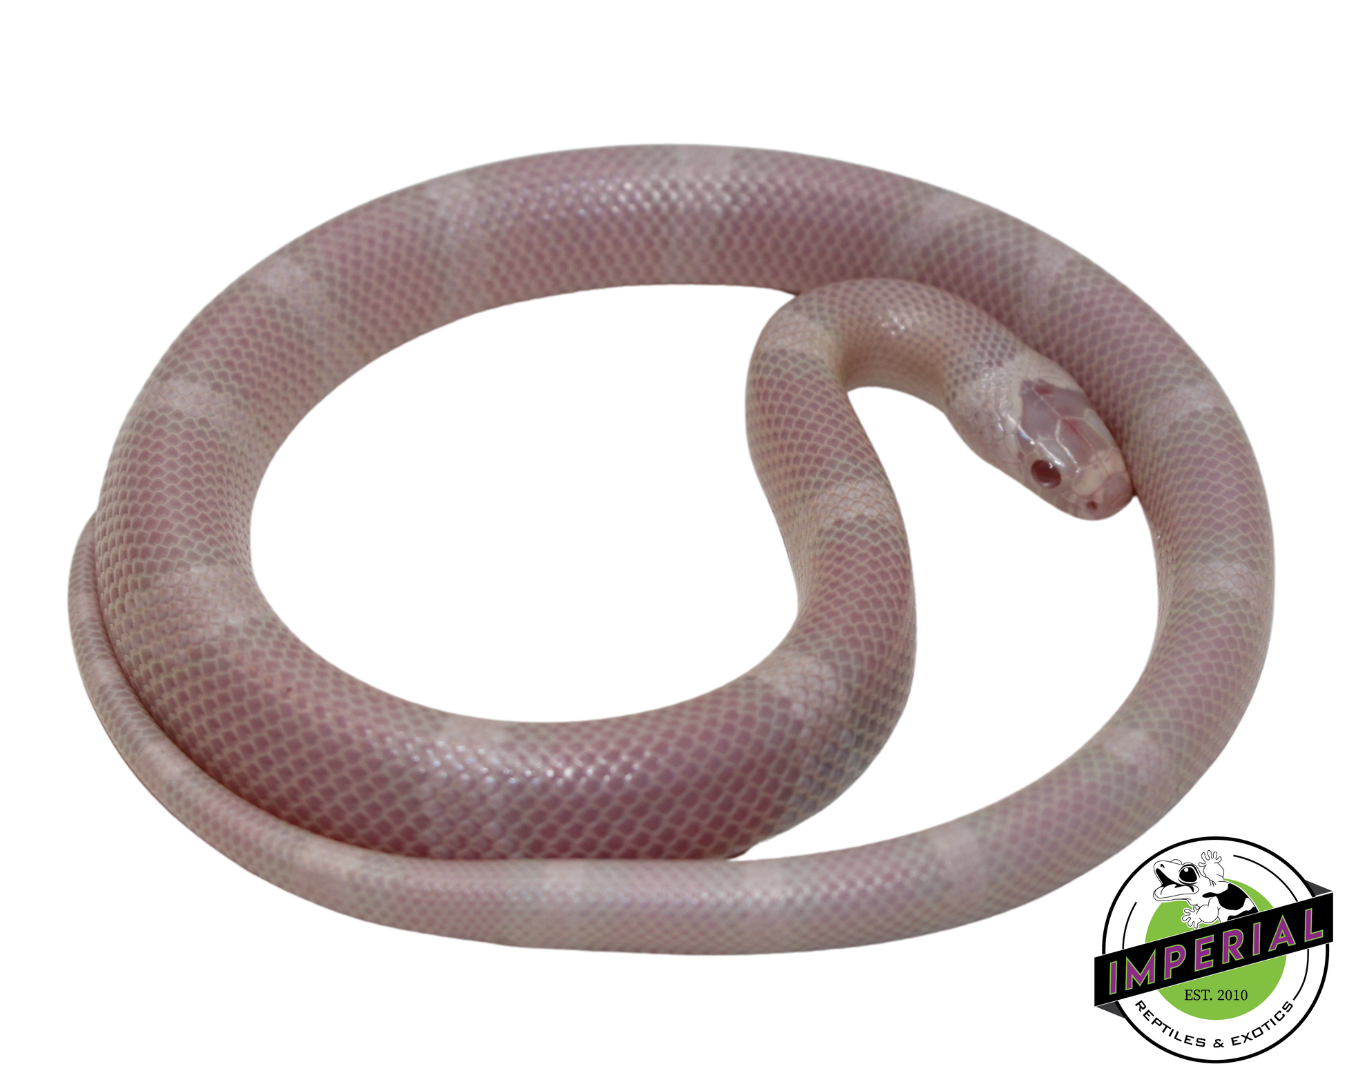 Snow Honduran Milk Snake for sale, reptiles for sale, buy reptiles online